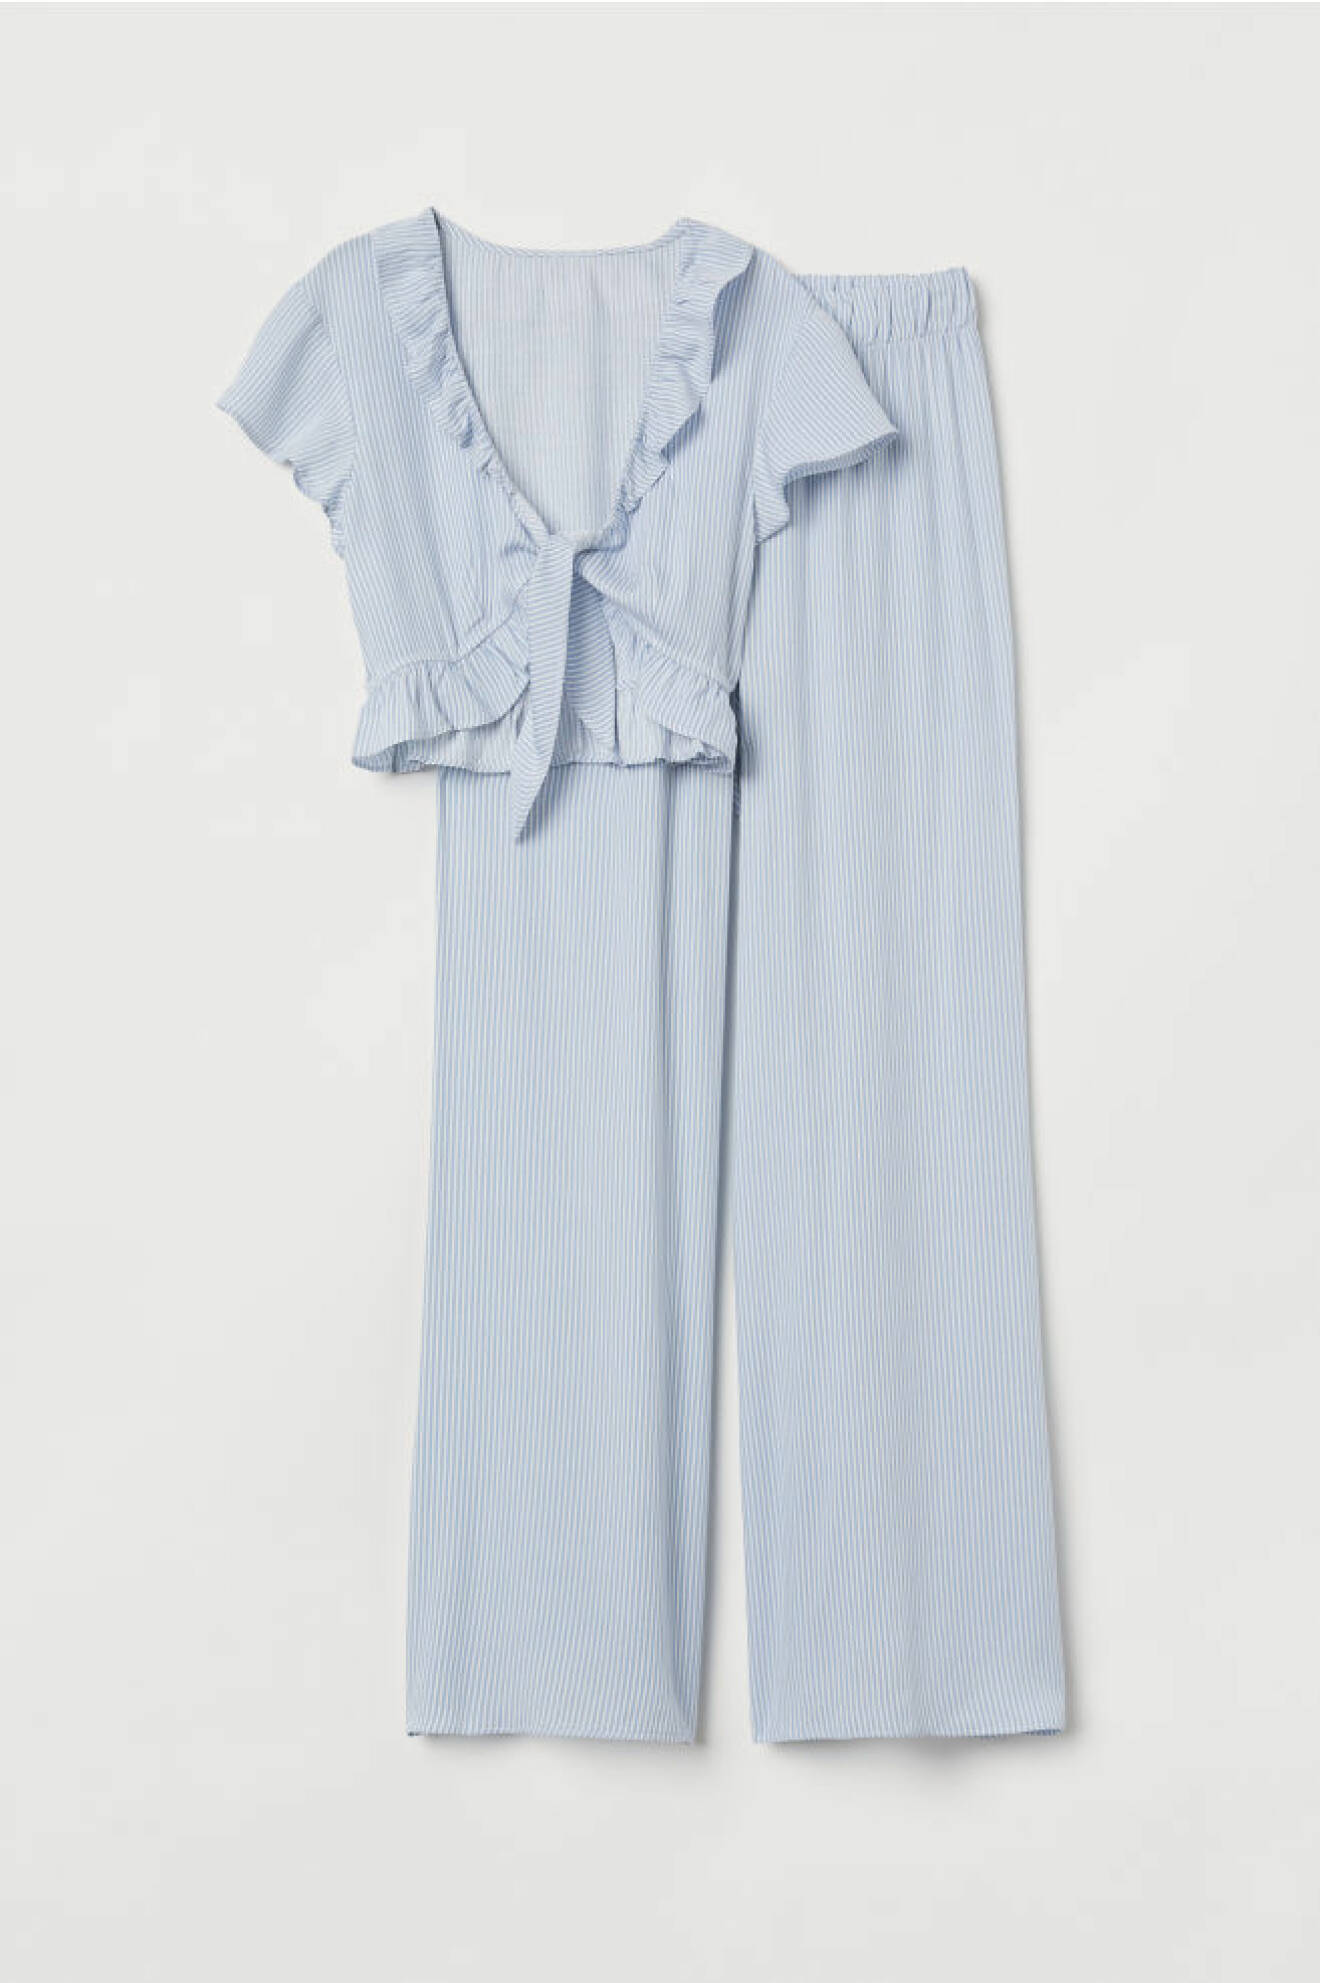 Pyjamasset från H&M